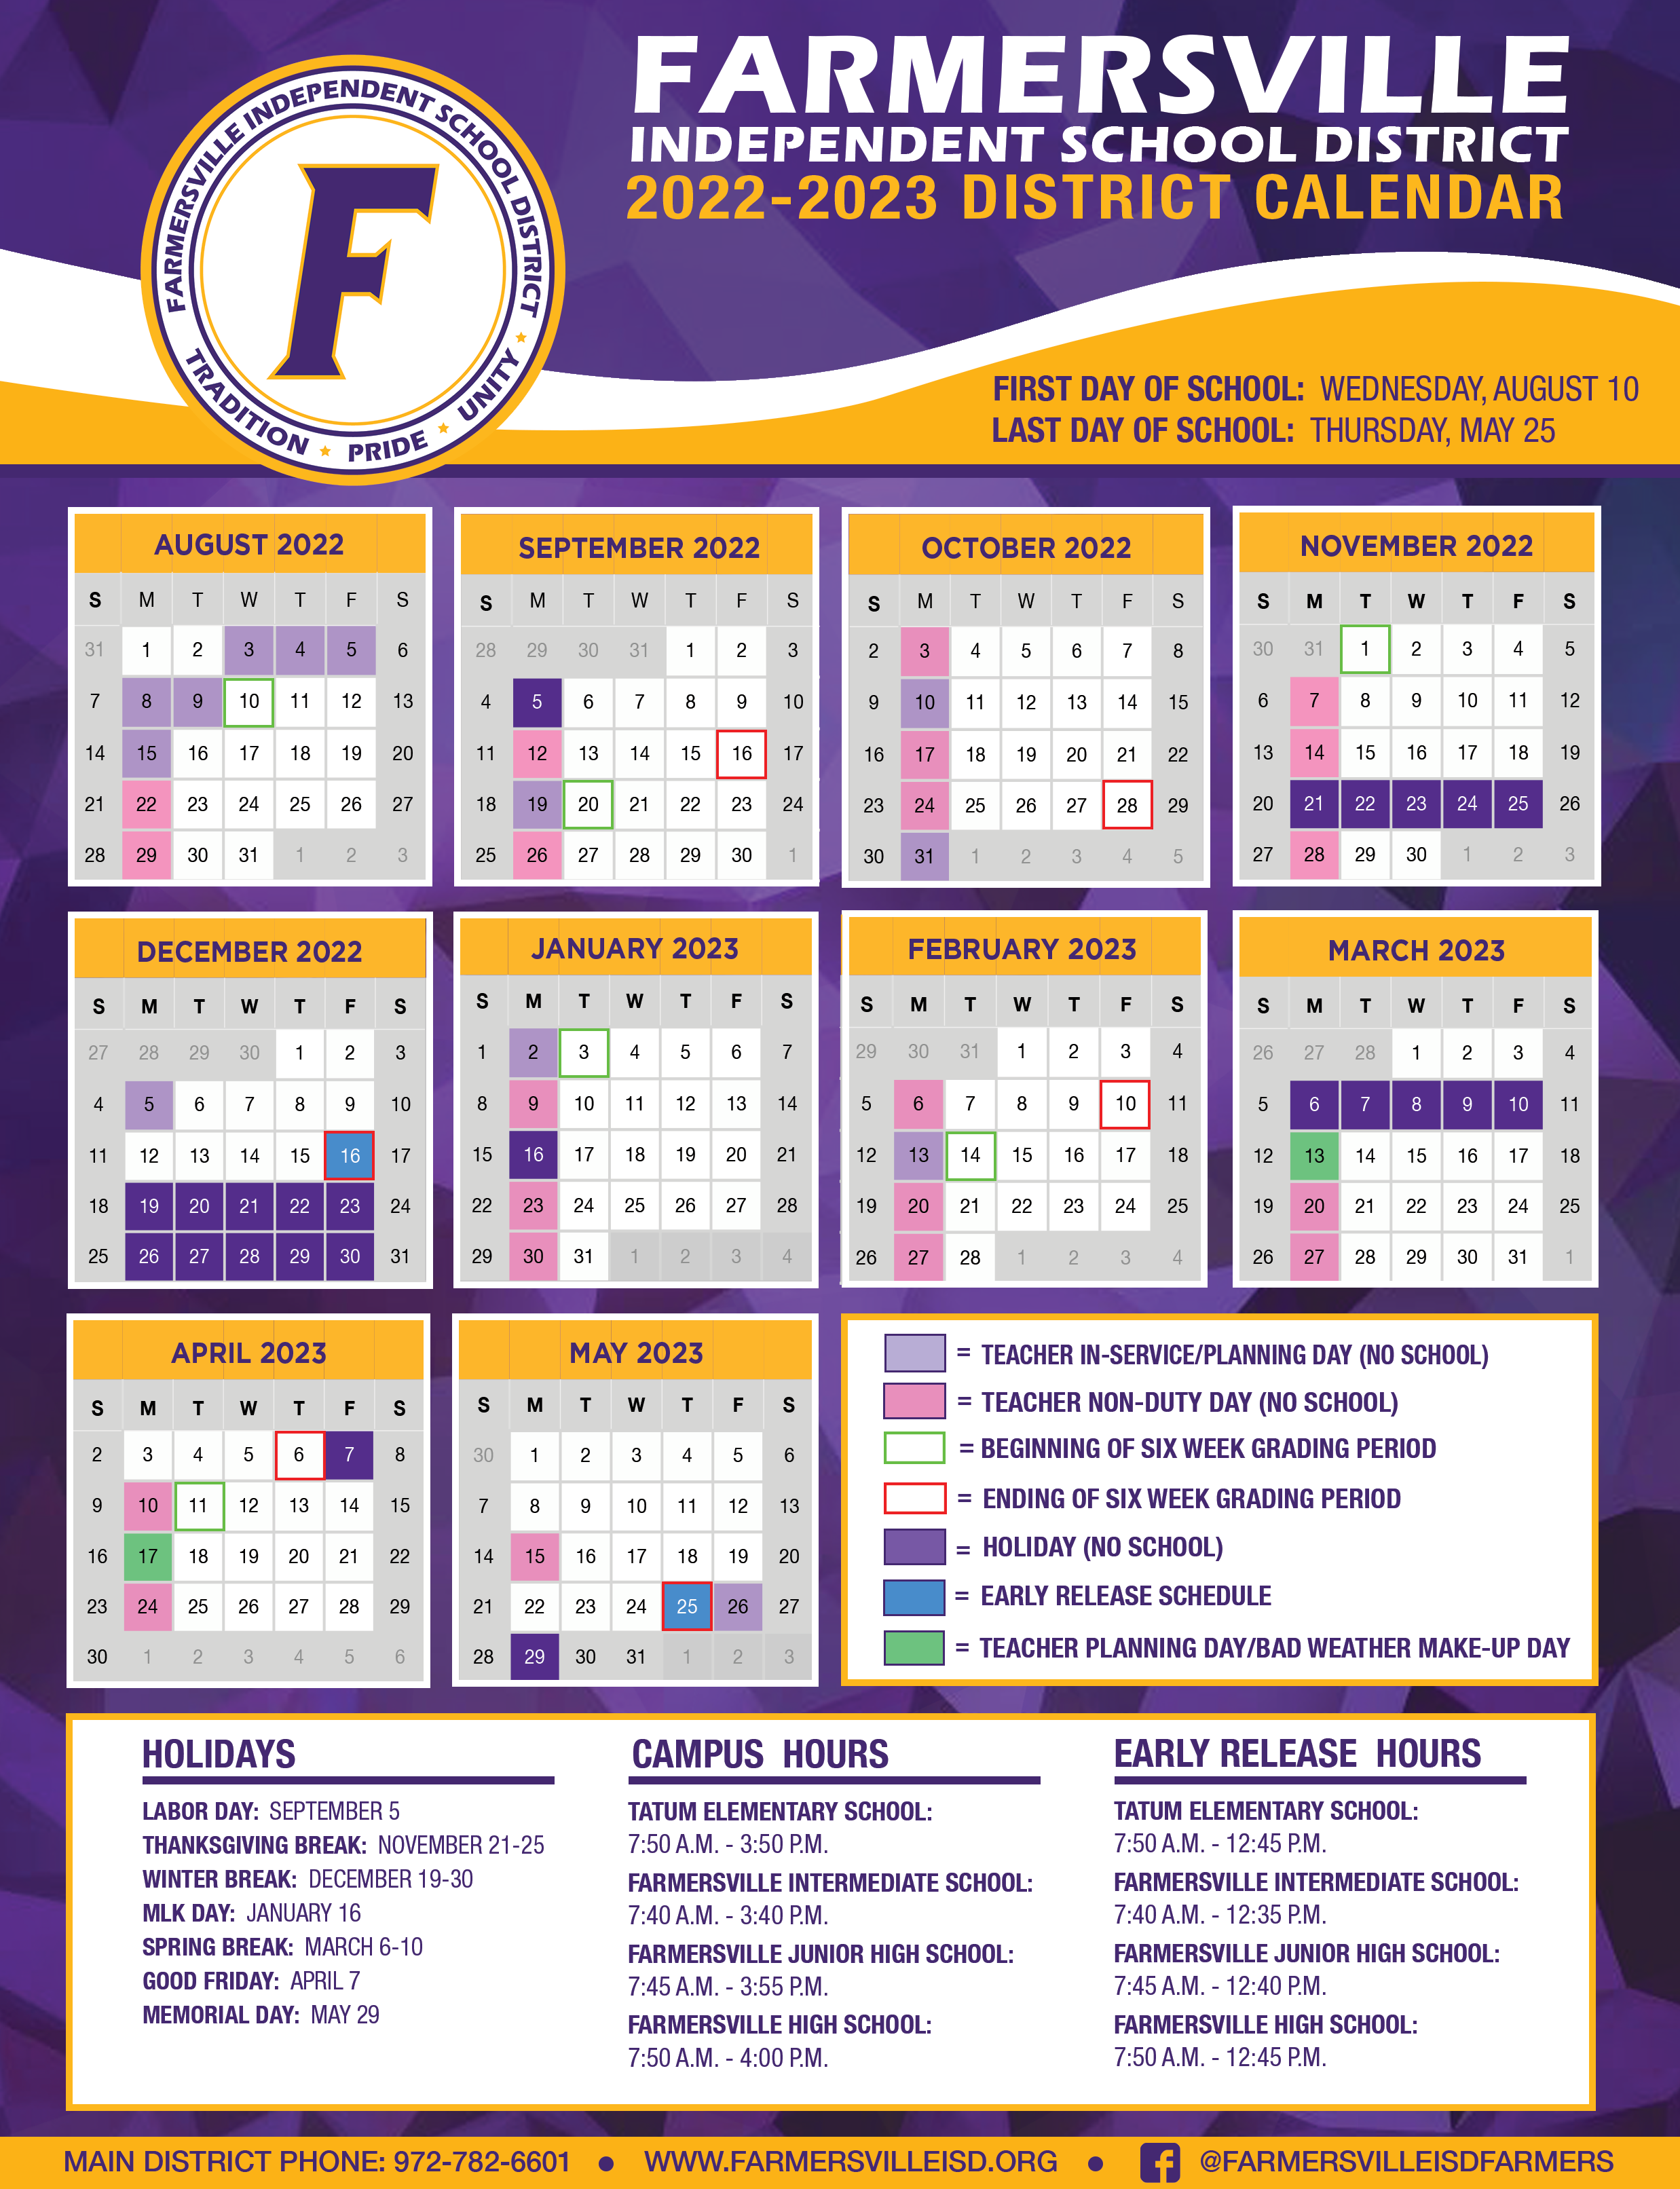 Farmersville Independent School District Calendar 2022 and 2023